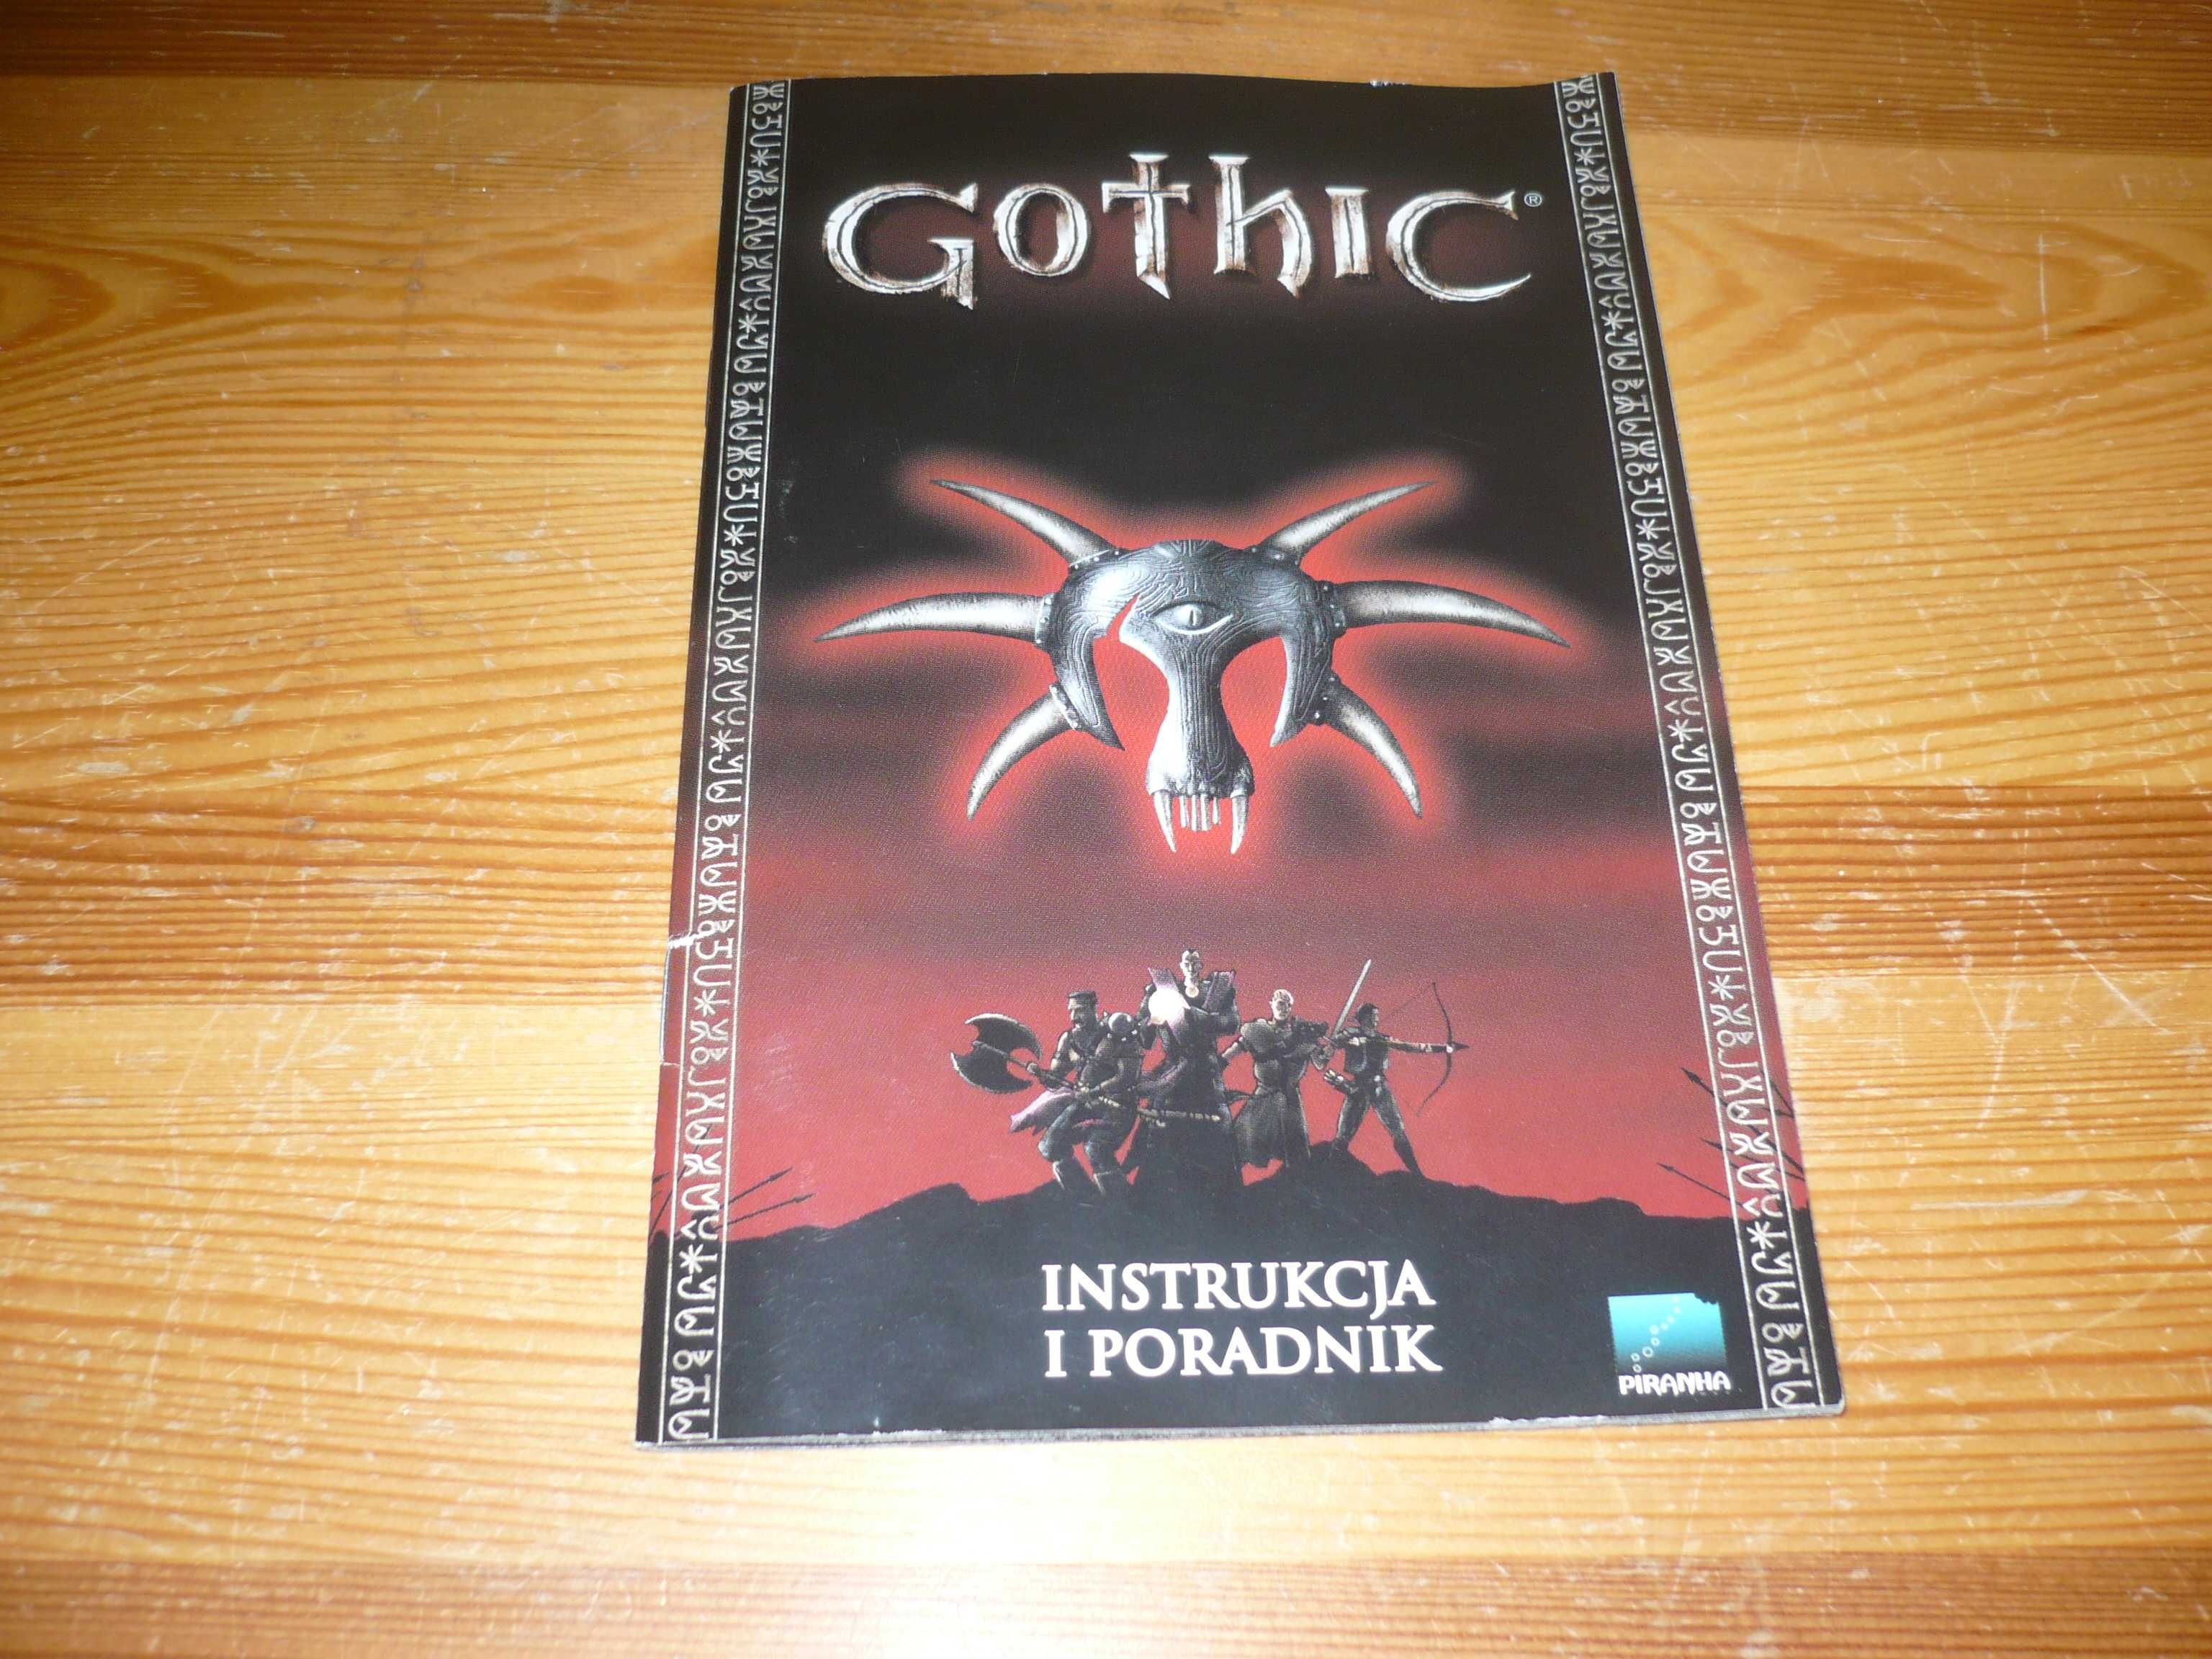 GOTHIC 1 PC CD-ROM 2 CD extra klasyka gier komputerowych